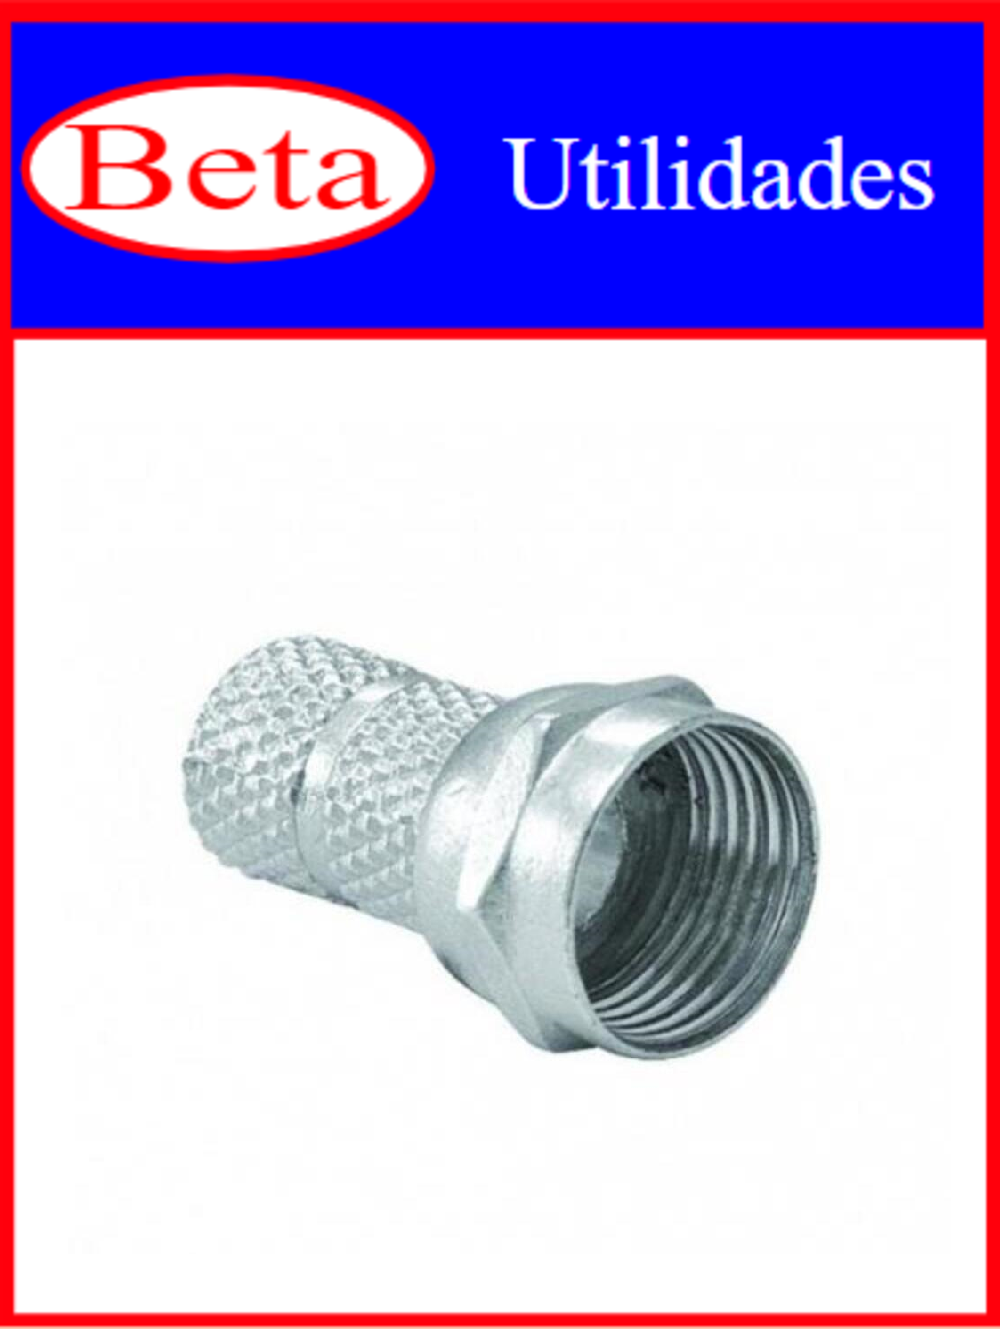 7898021401806 - BETA UTILIDADES CONECTOR ROSCA DUP C/2